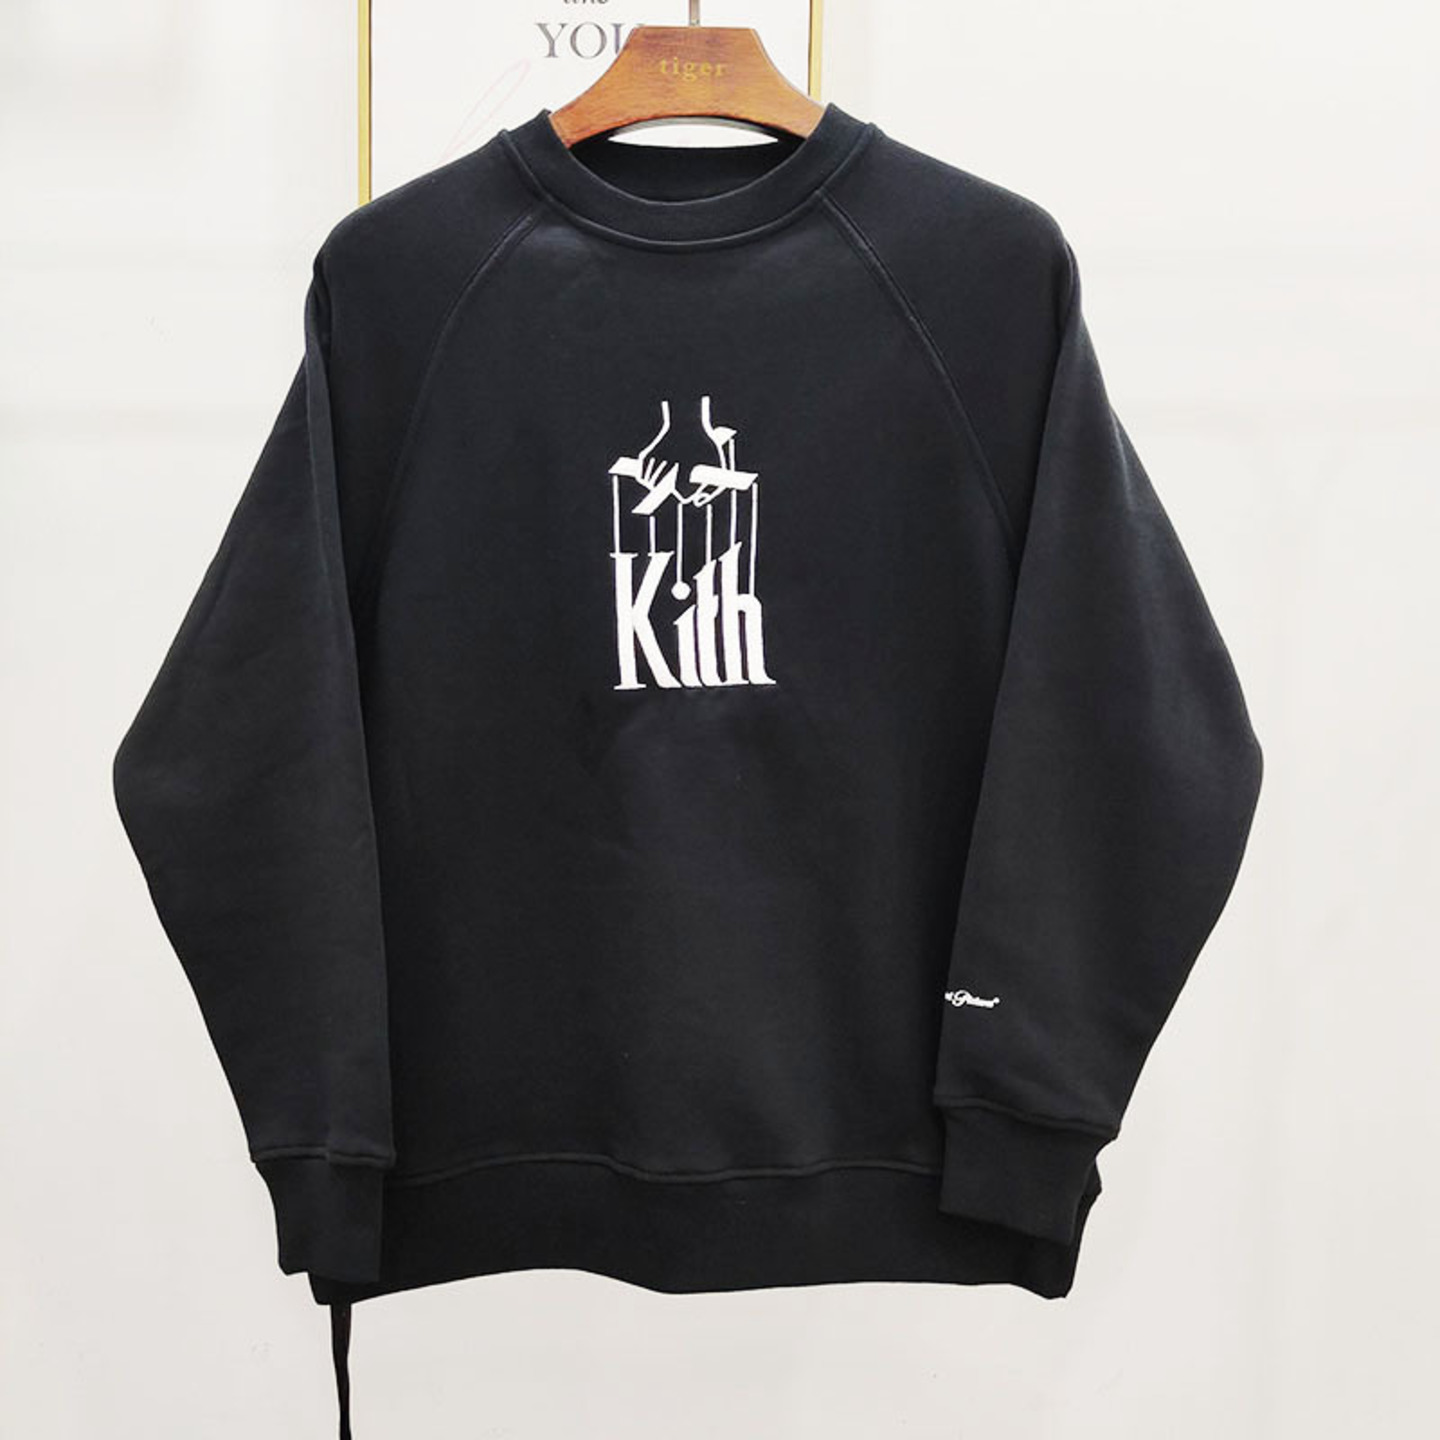 The Godfather' x KITH Collaborative Sweatshirt